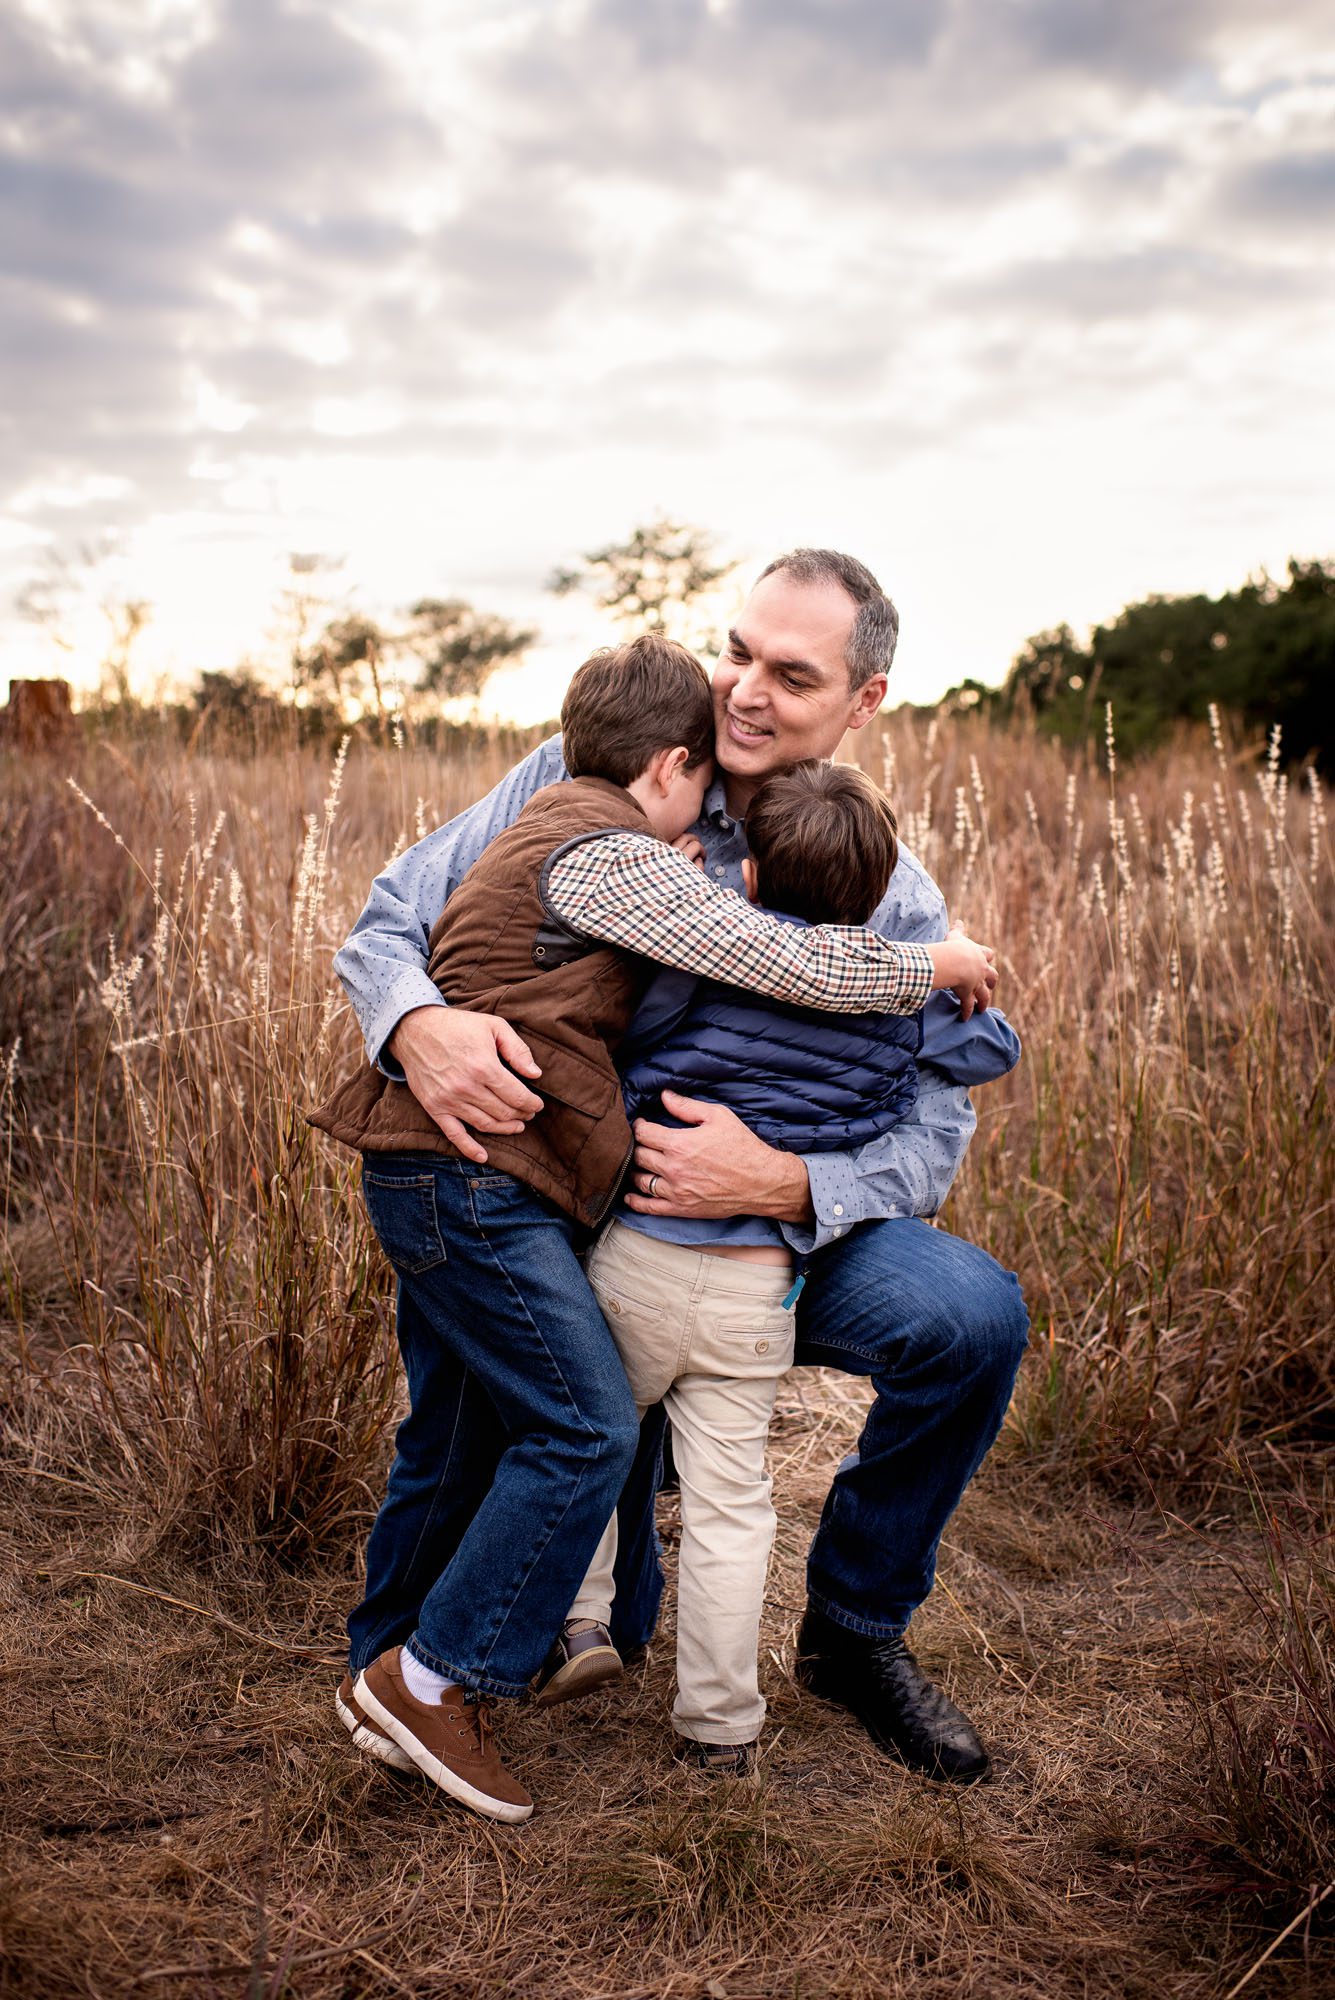 Boys hugging Dad in a grassy field, San Antonio Family Photographer